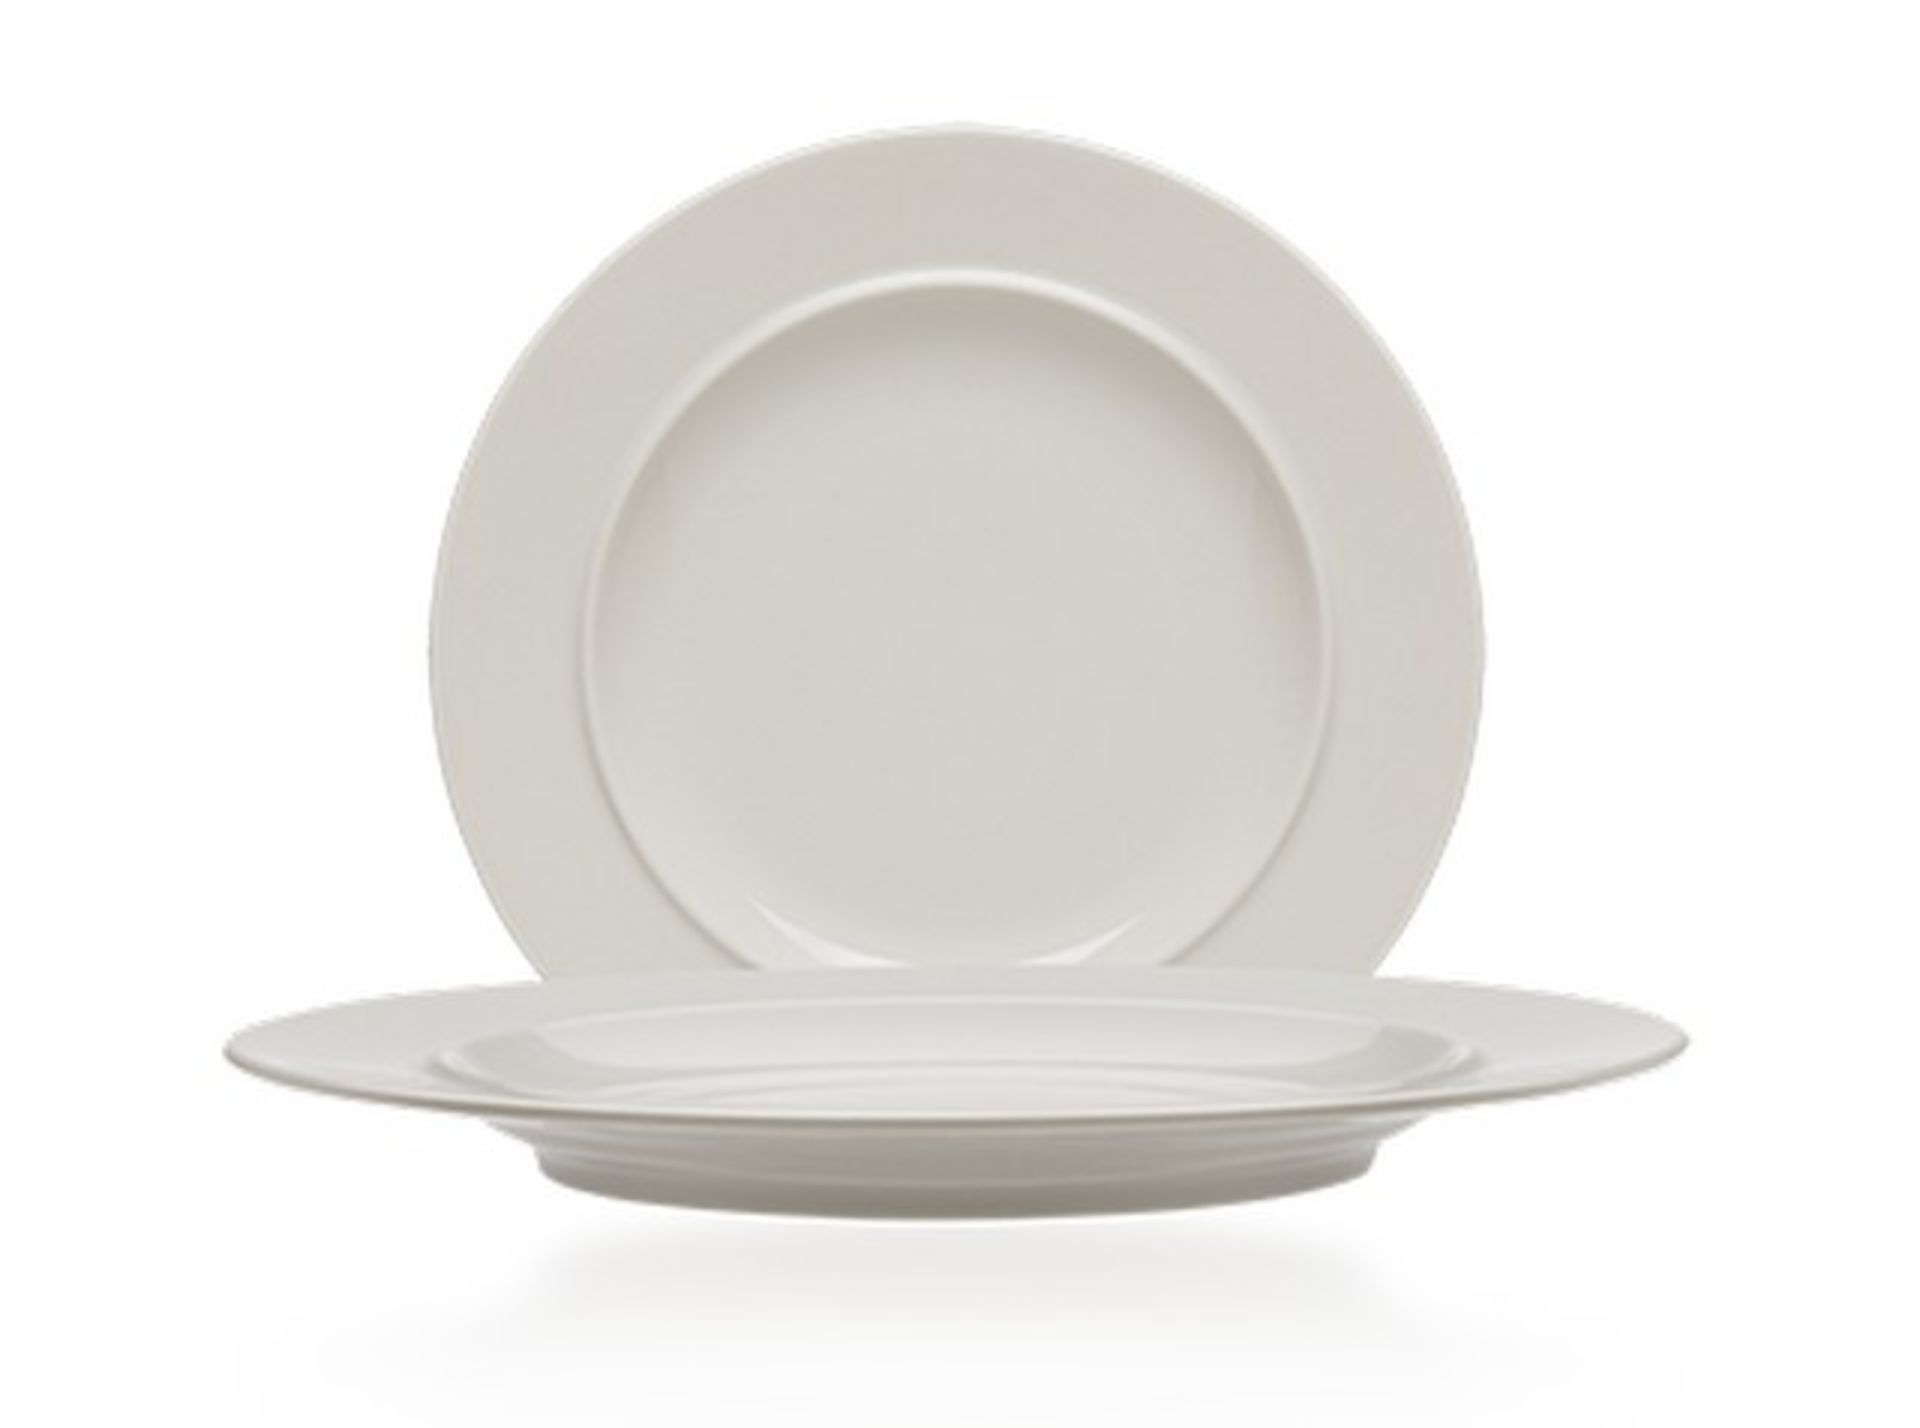 V Brand New Alessi La Bella Pack Of 2 Dinner Plates (27cm diameter) RRP £22.99